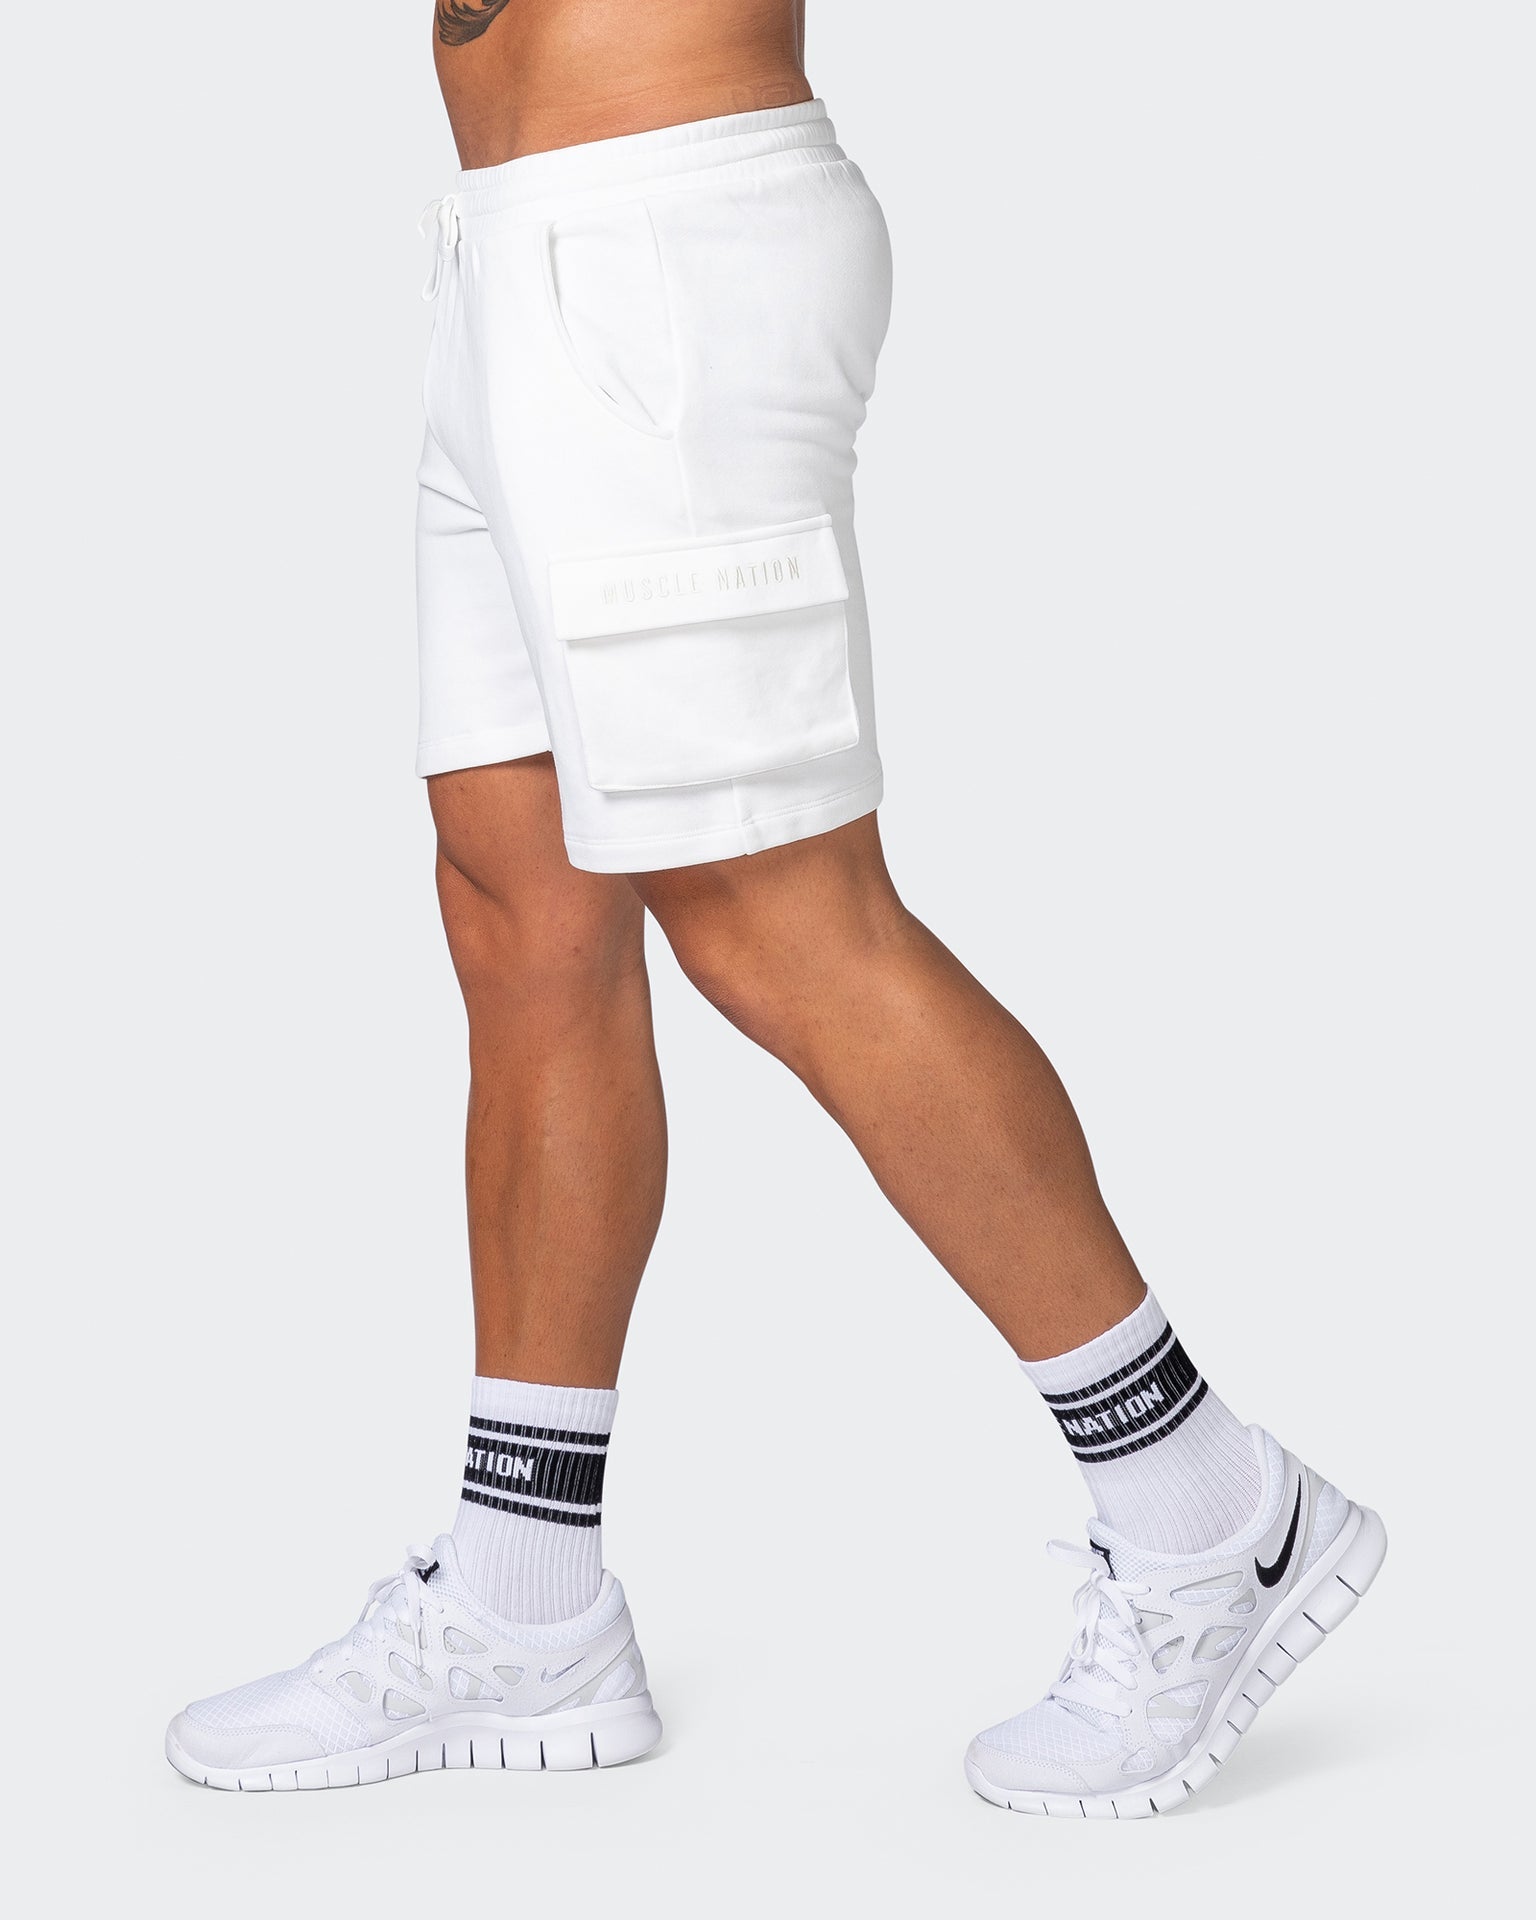 musclenation Activewear Cargo Shorts - Vanilla